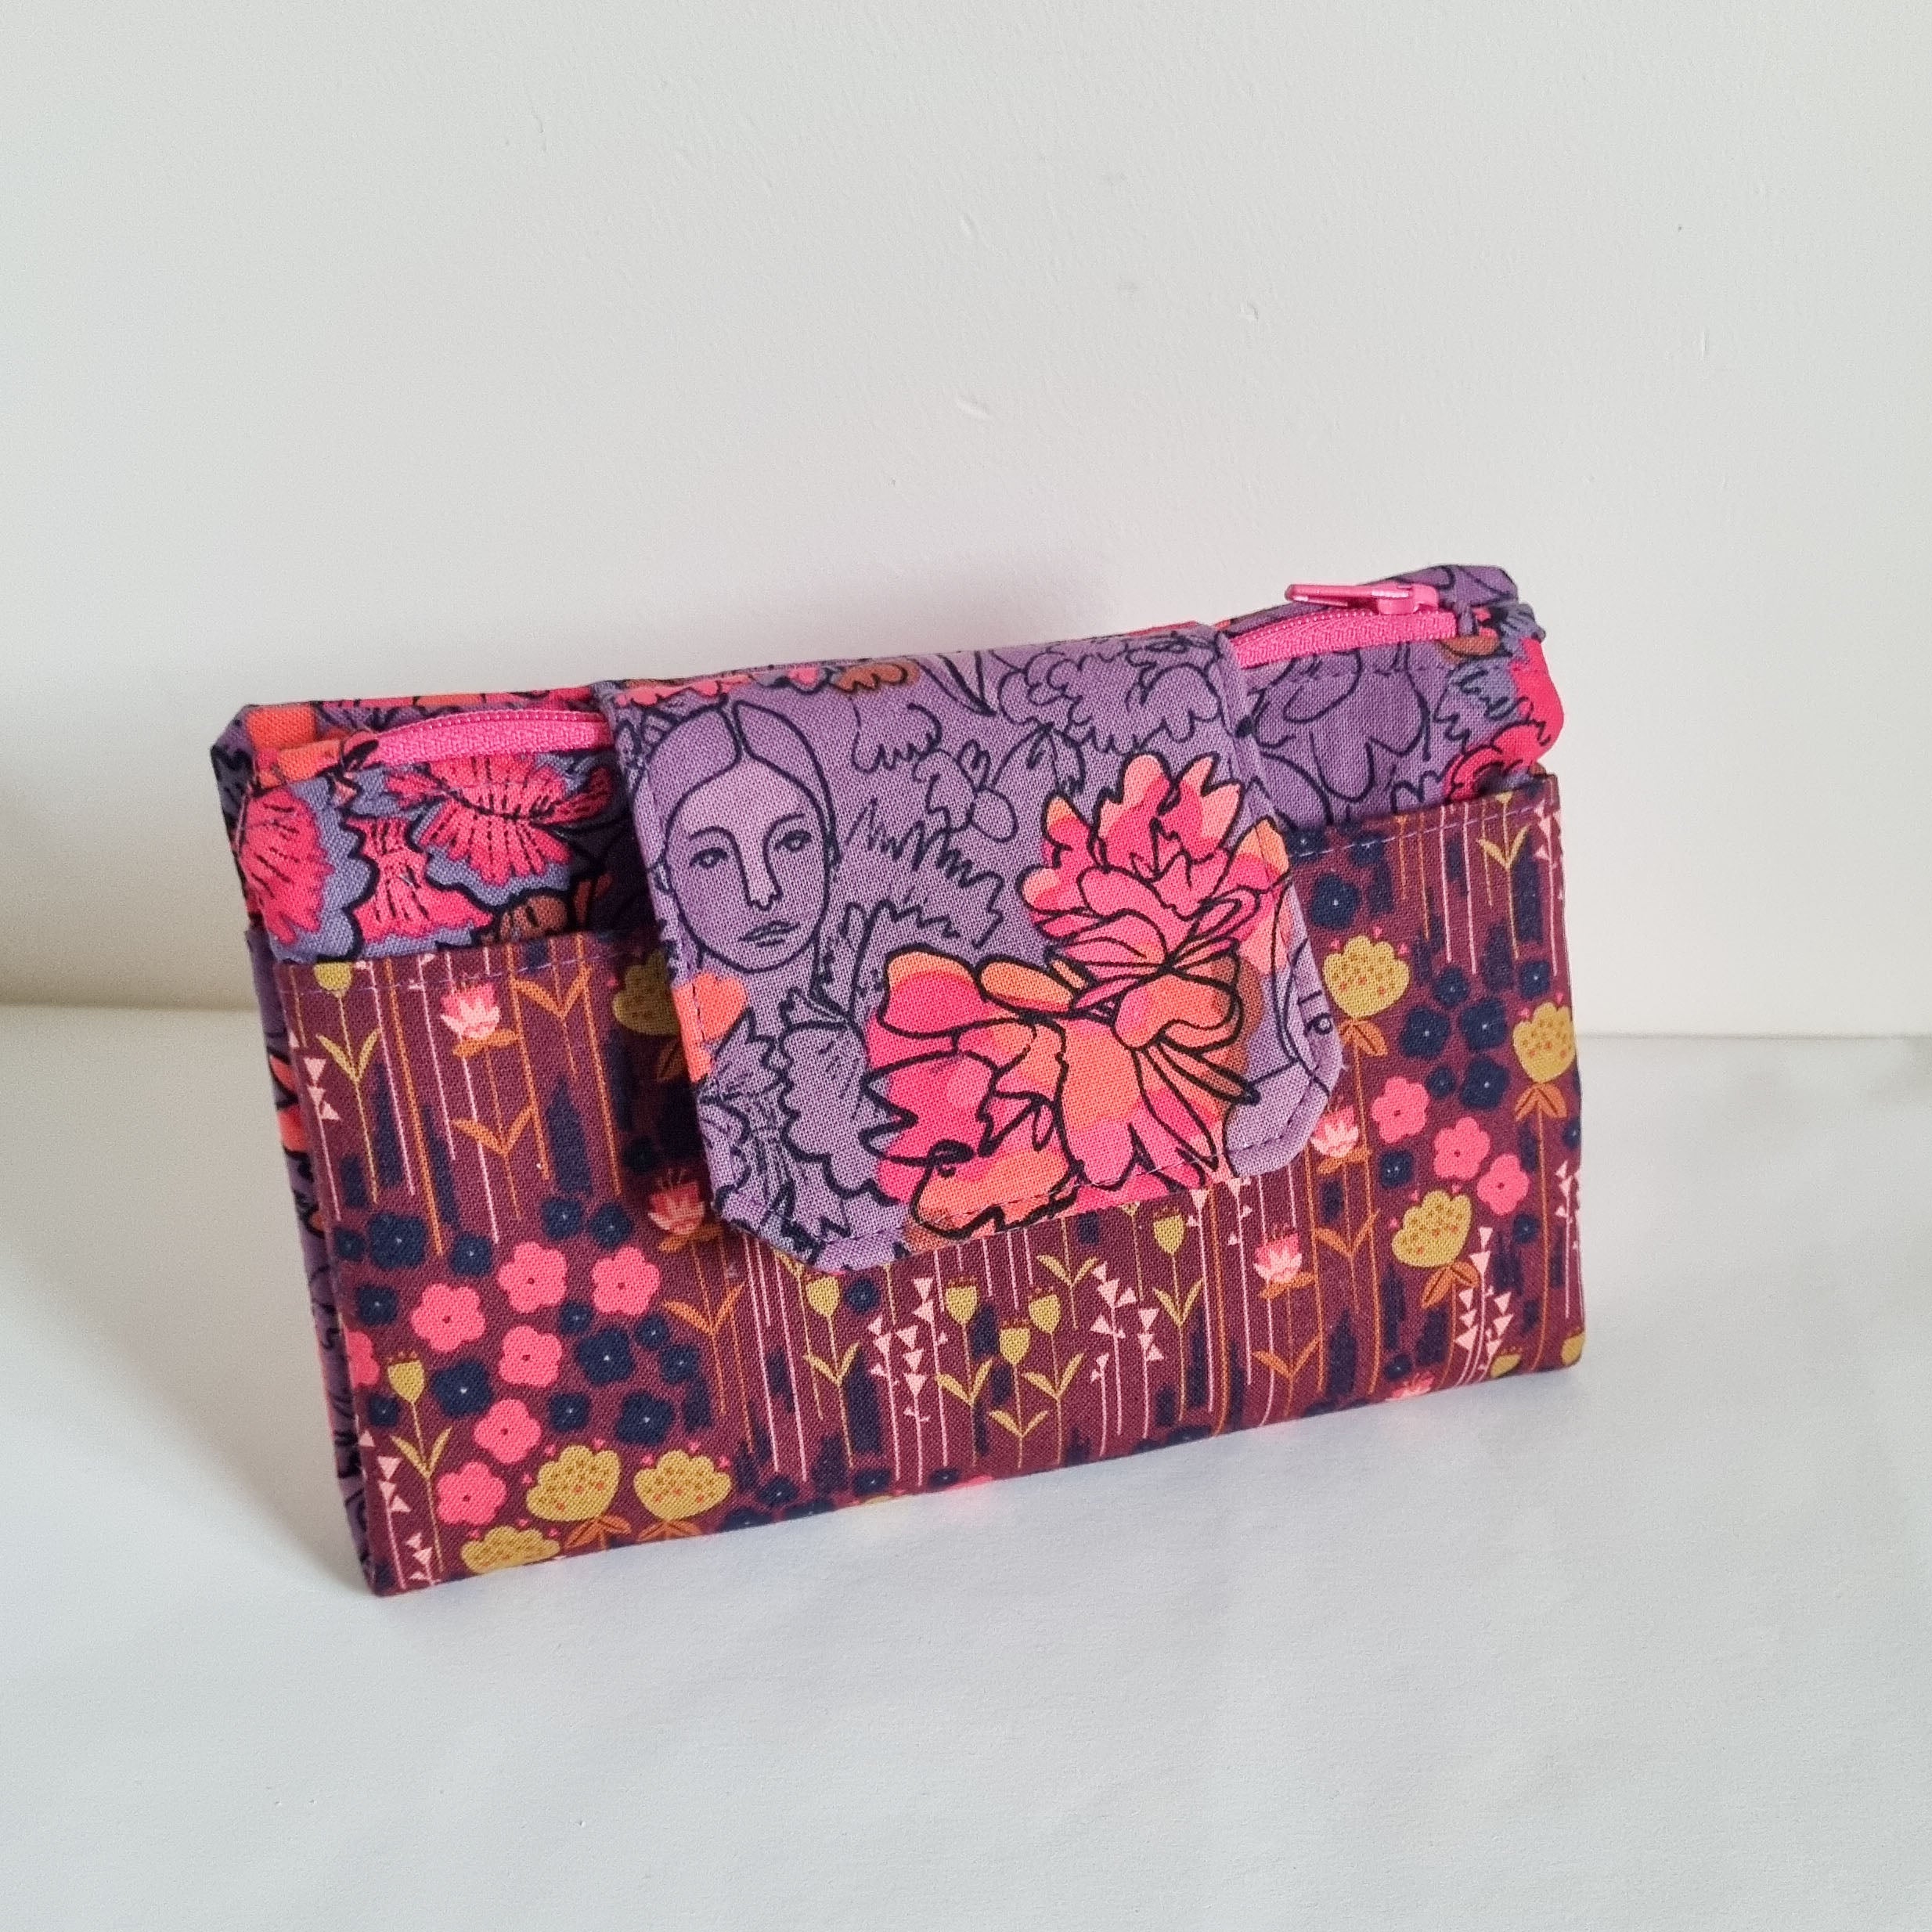 Bottega Veneta - Purple Woven Leather Wallet With Strap